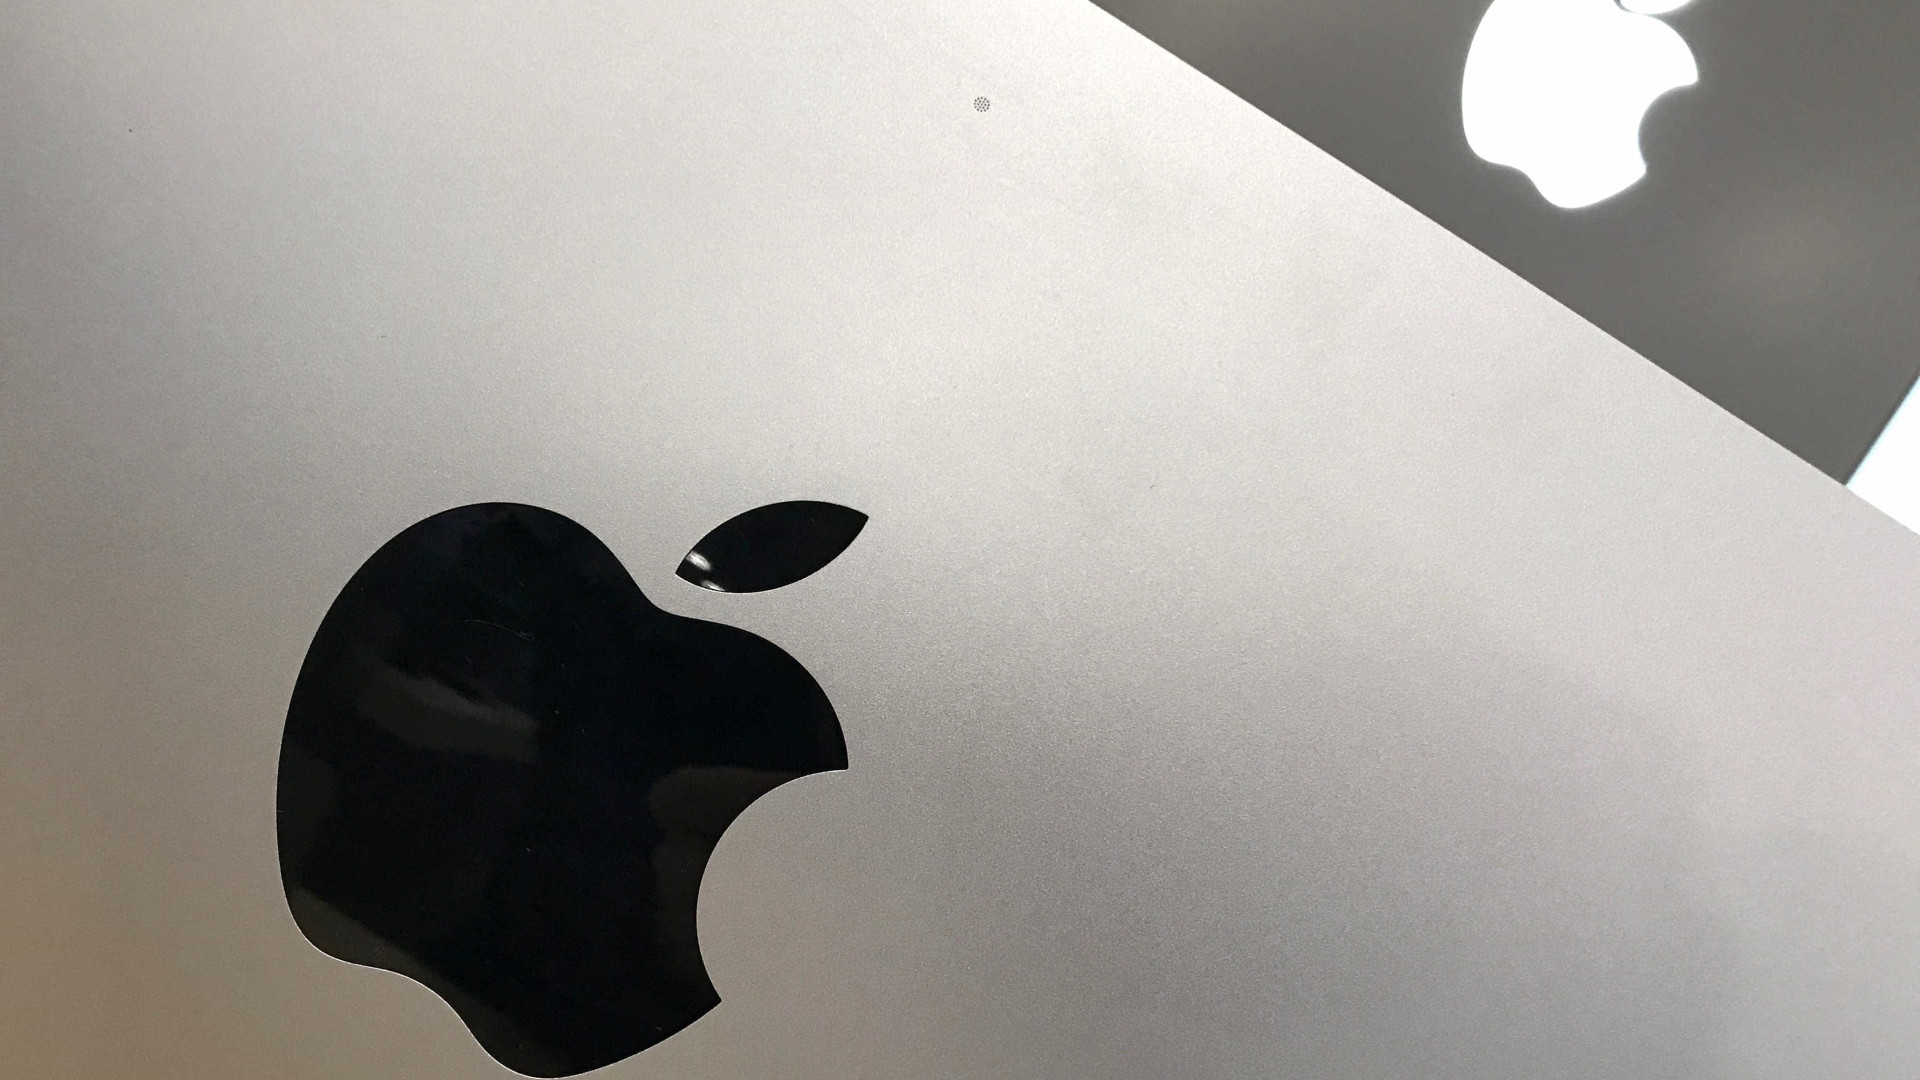 Justiça ordena que Apple retire do ar
'propaganda enganosa' de iPhones